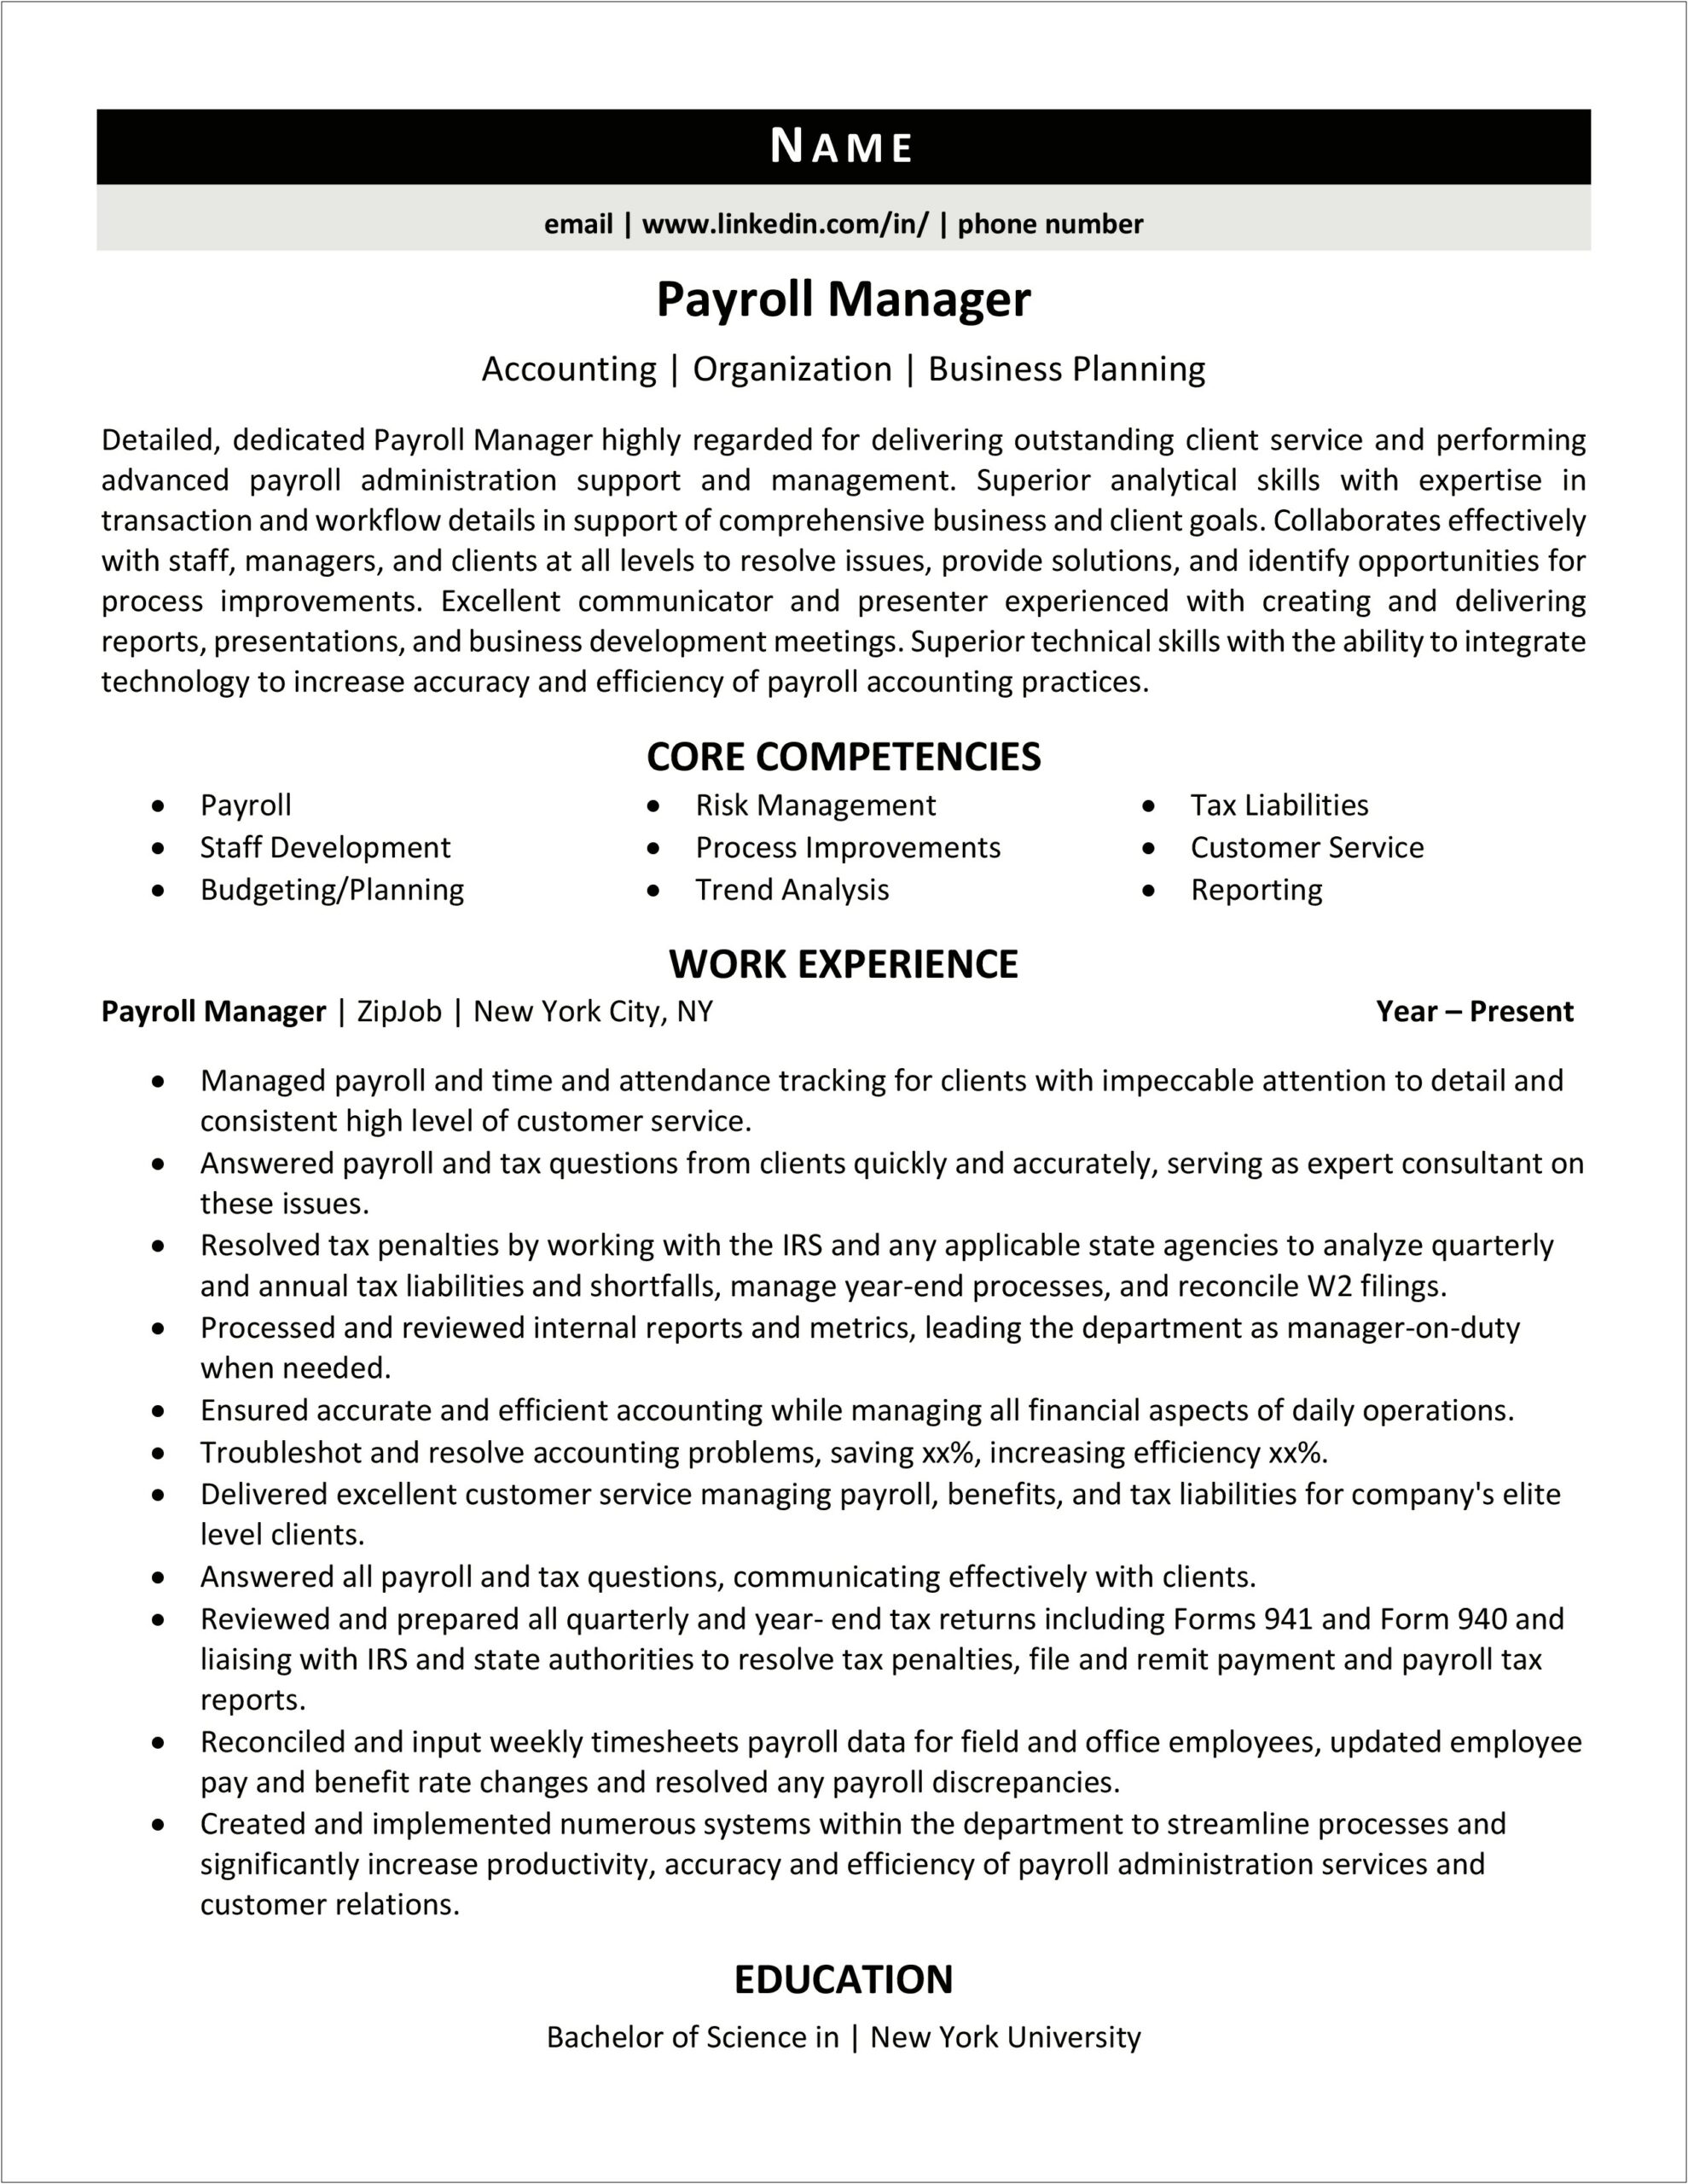 Sample Payroll Manager Resume 3